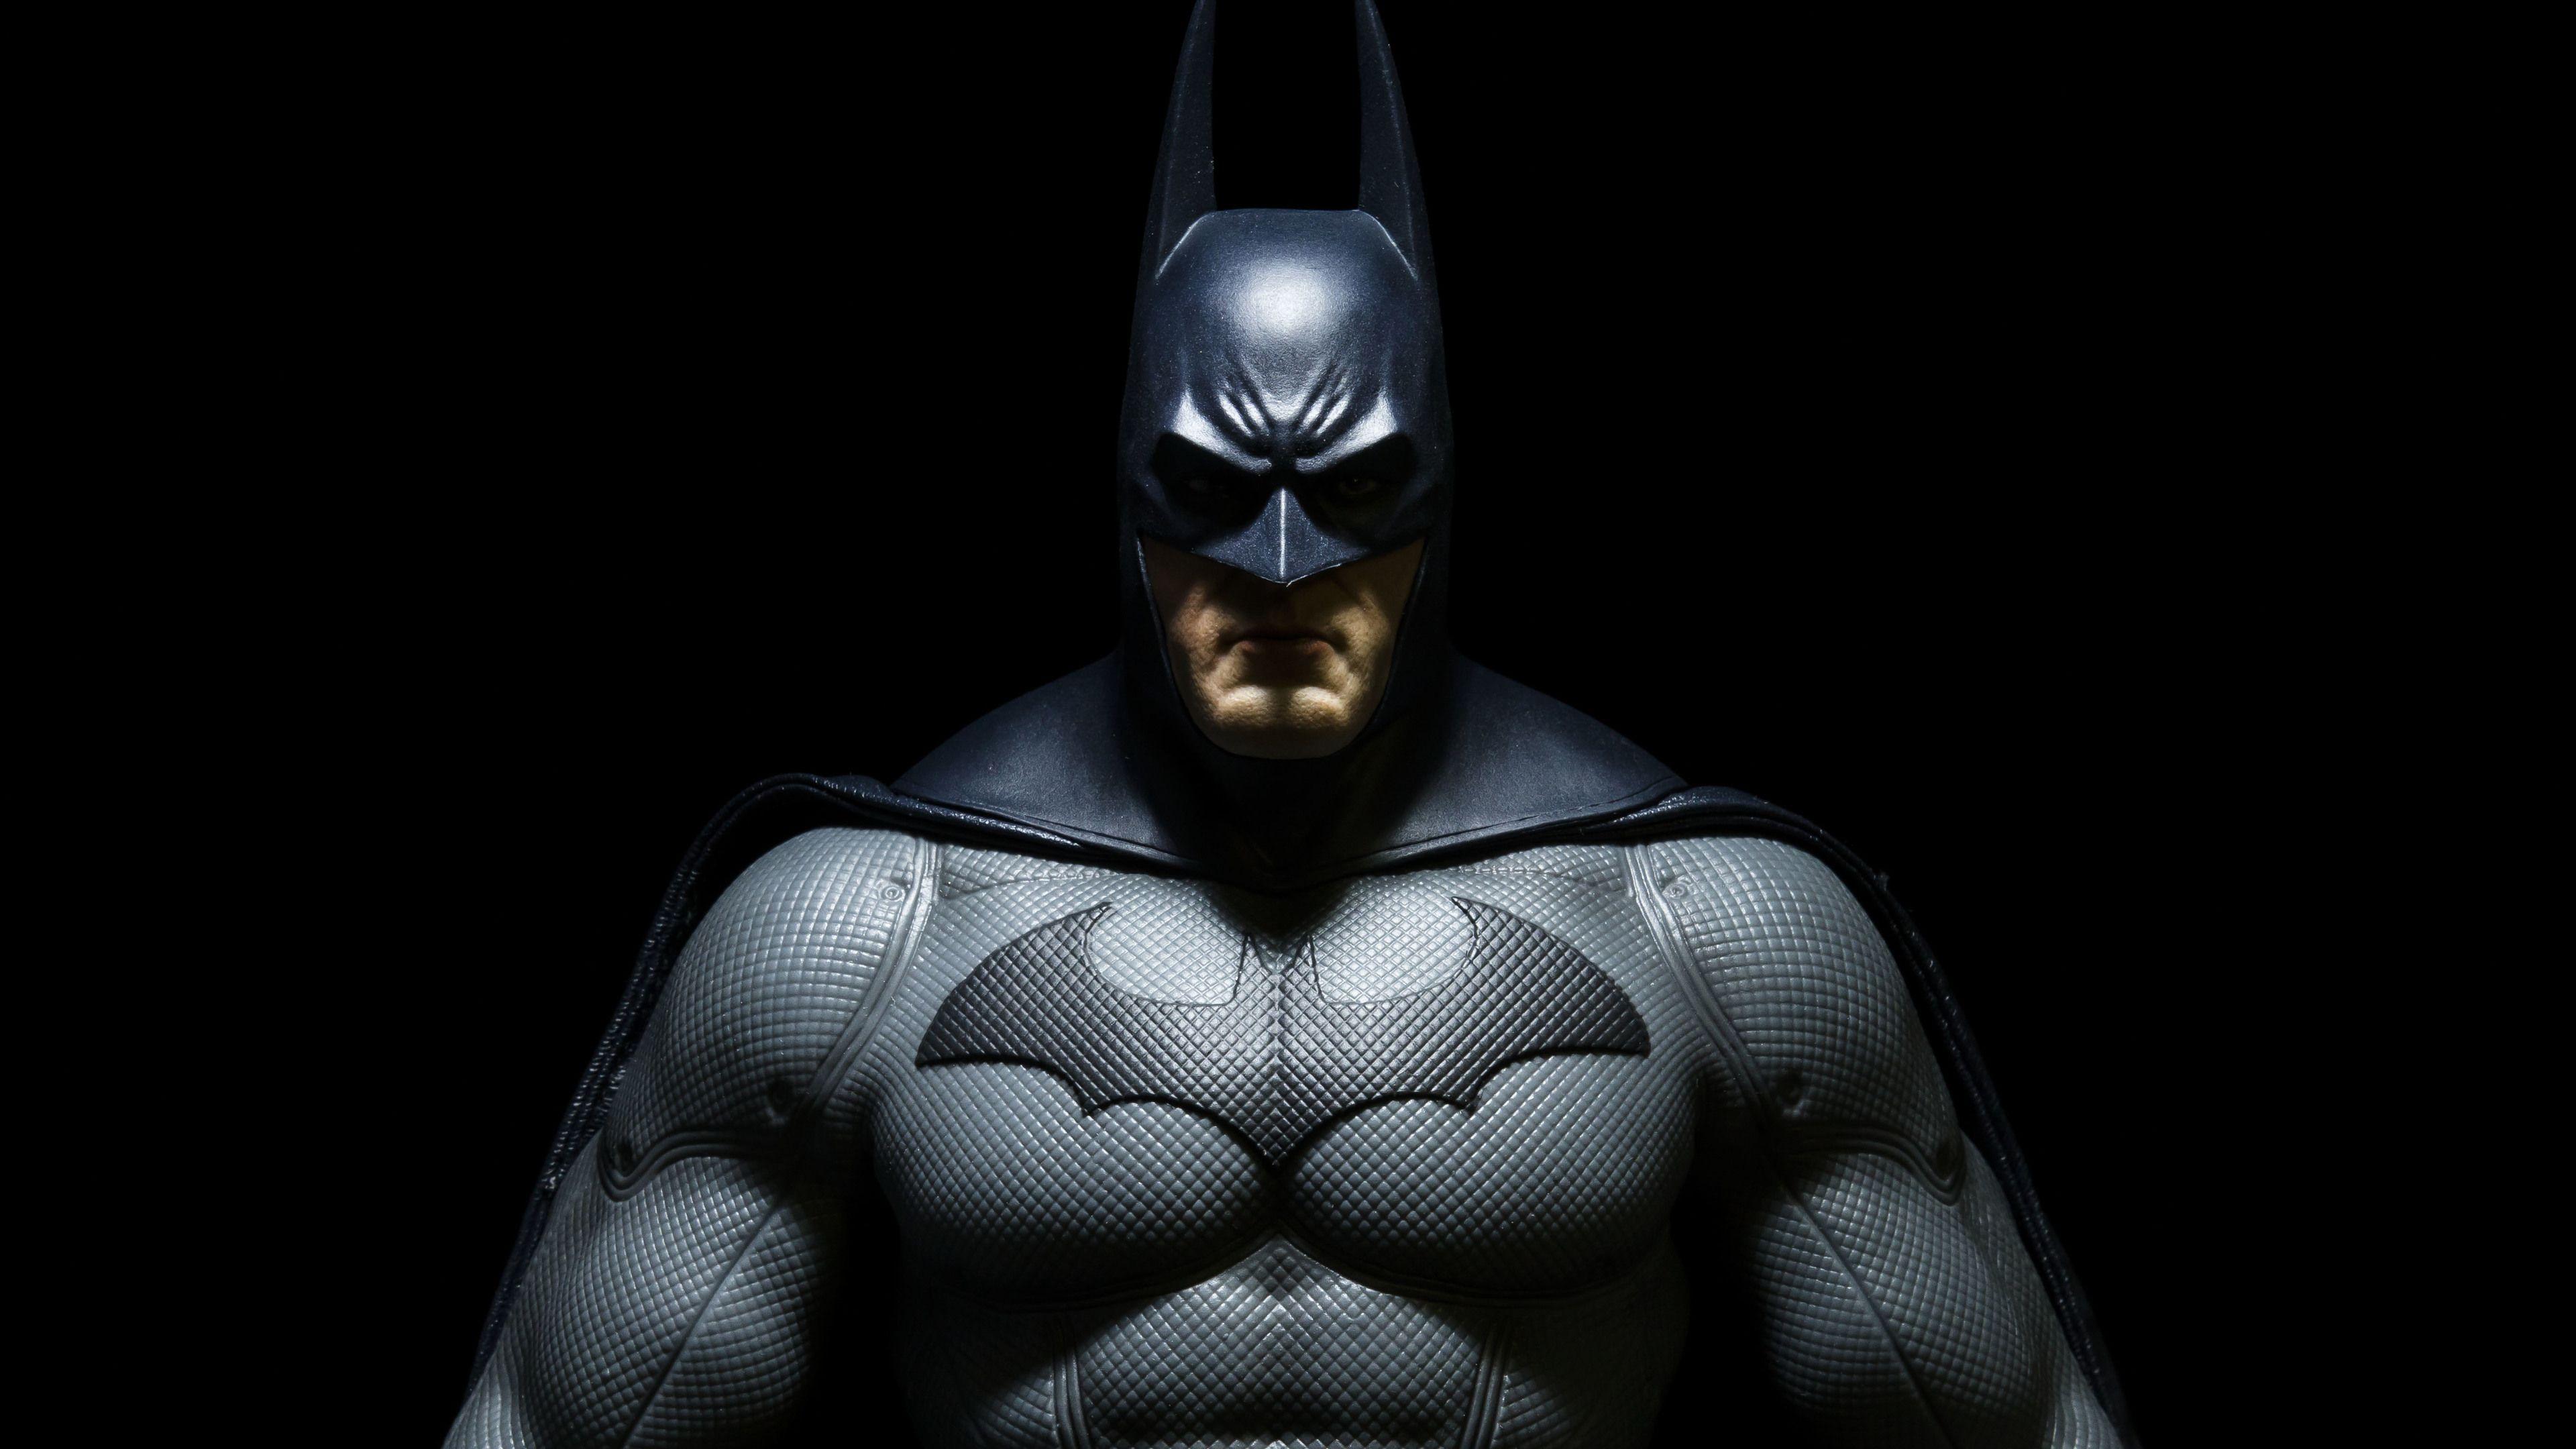 Batman Ultra HD Wallpapers - Top Free Batman Ultra HD Backgrounds